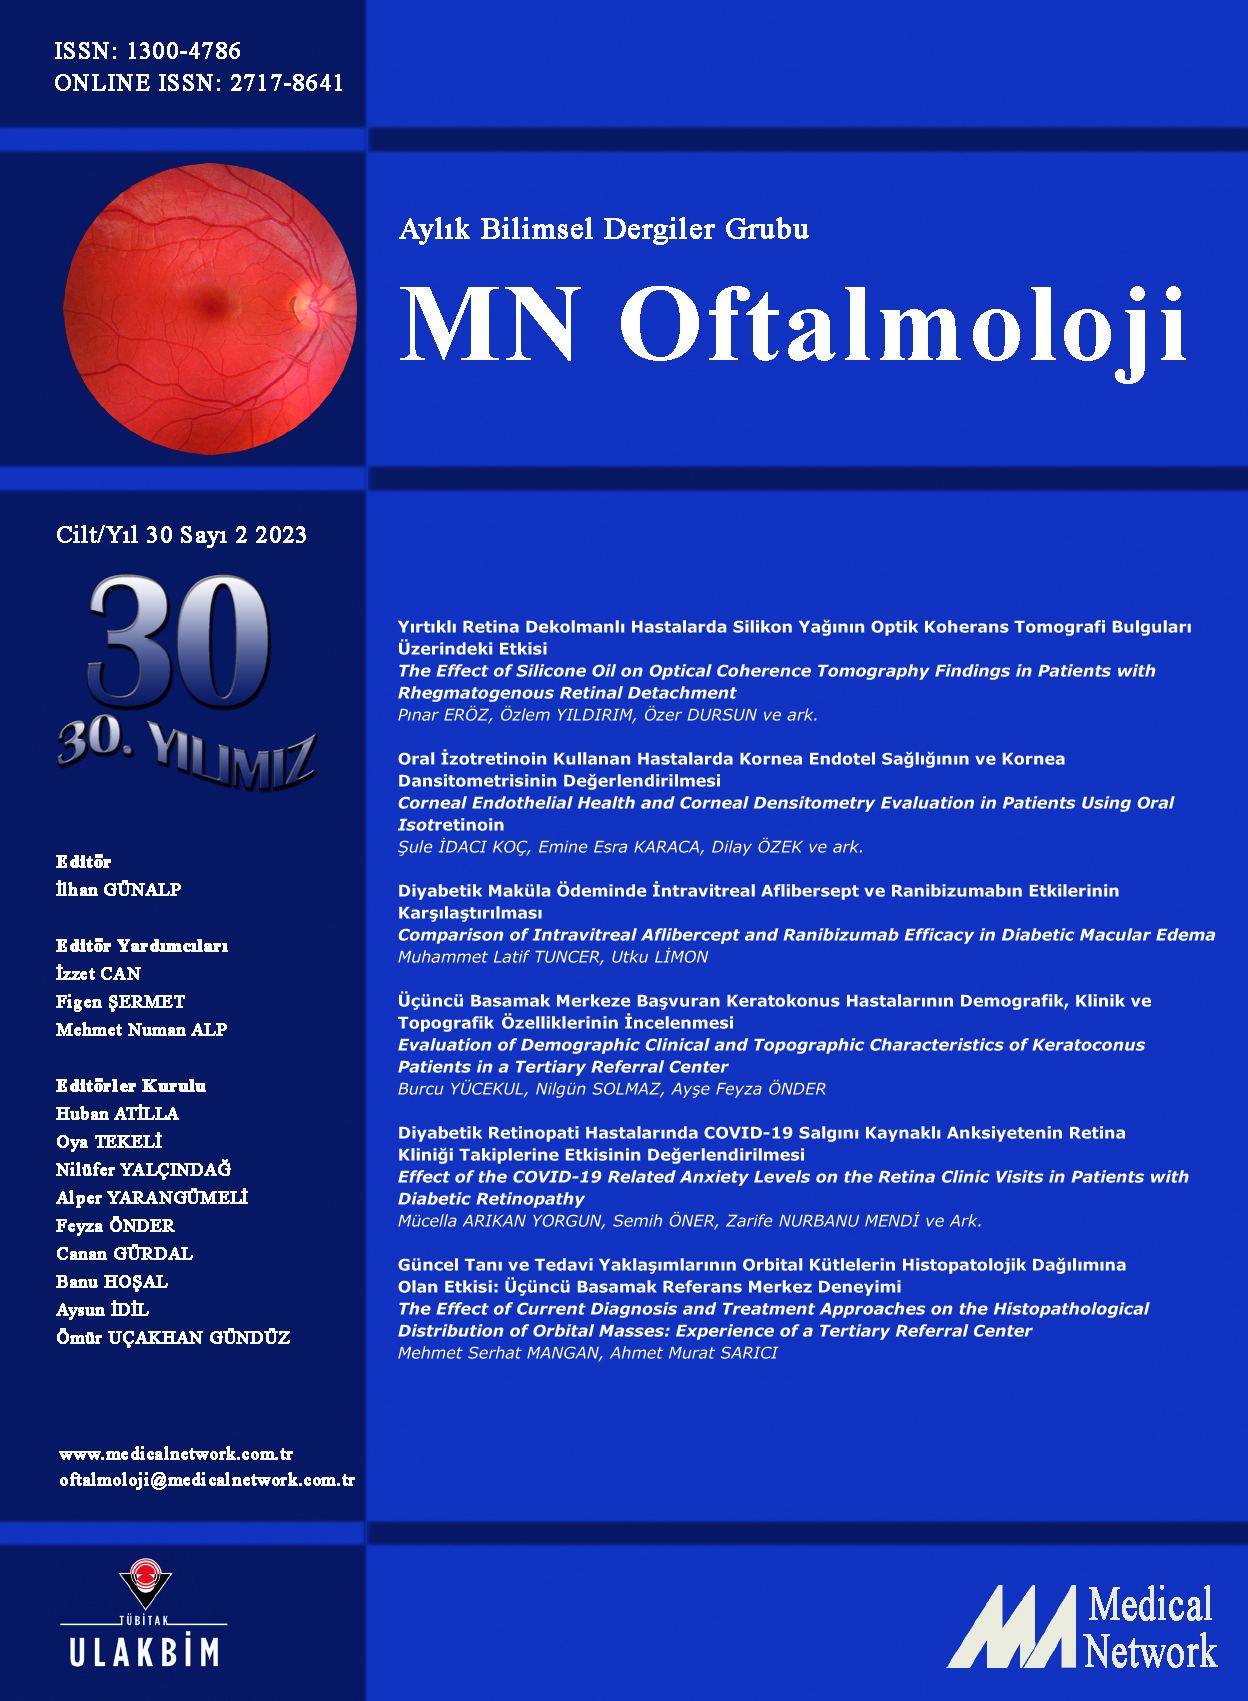 <p>MN Oftalmoloji Cilt: 30 Sayı: 2 2023 (MN Ophthalmology Volume: 30 No: 2 2023)</p>